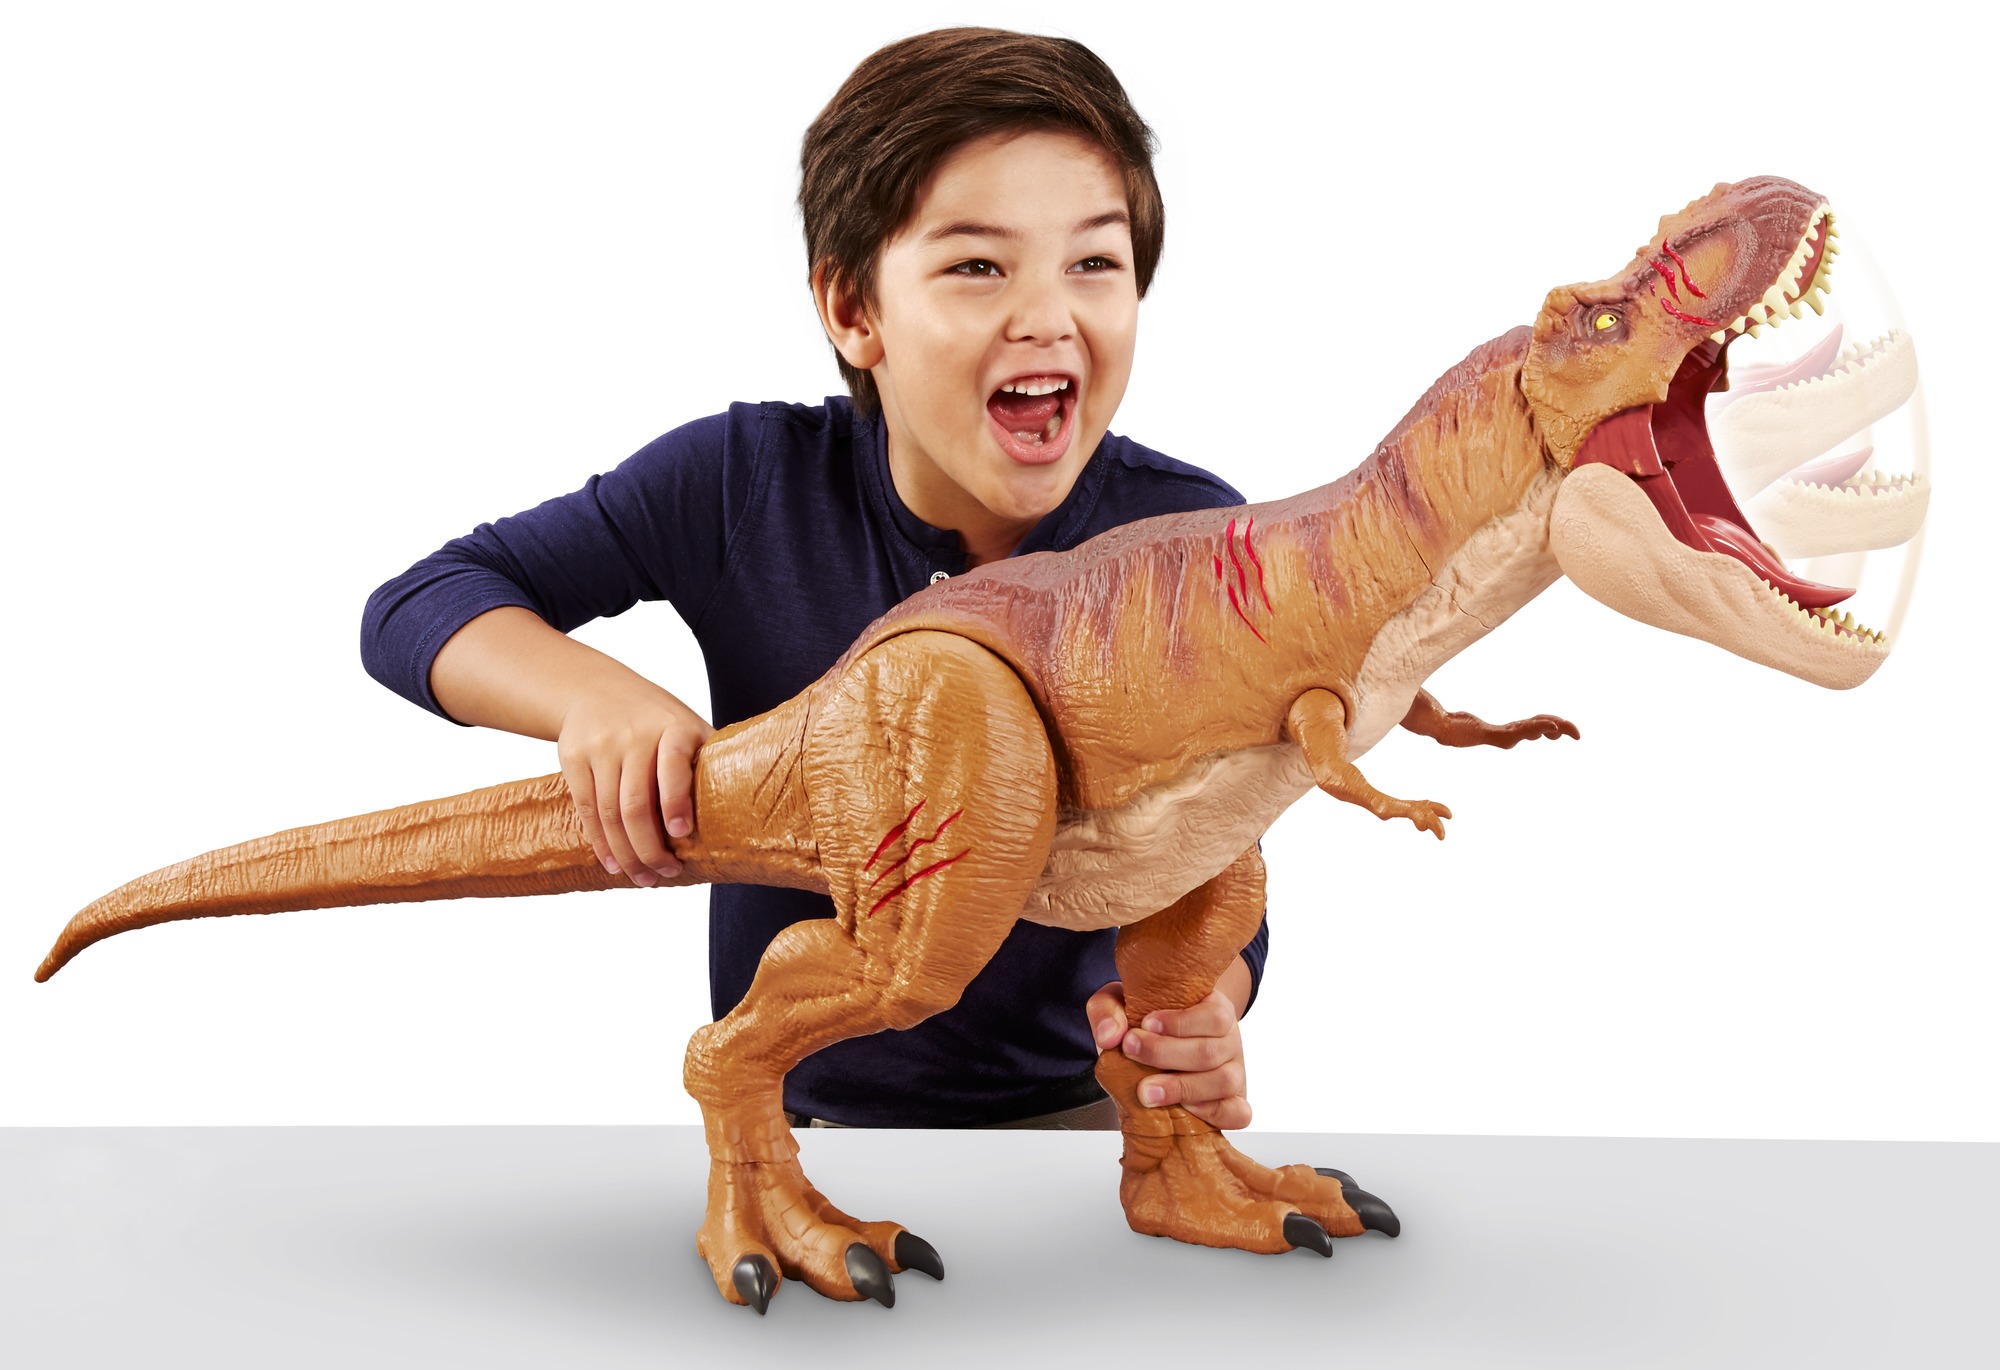 Jurassic World Battle Damage Roarin' Super Colossal Tyrannosaurus Rex - image 4 of 12